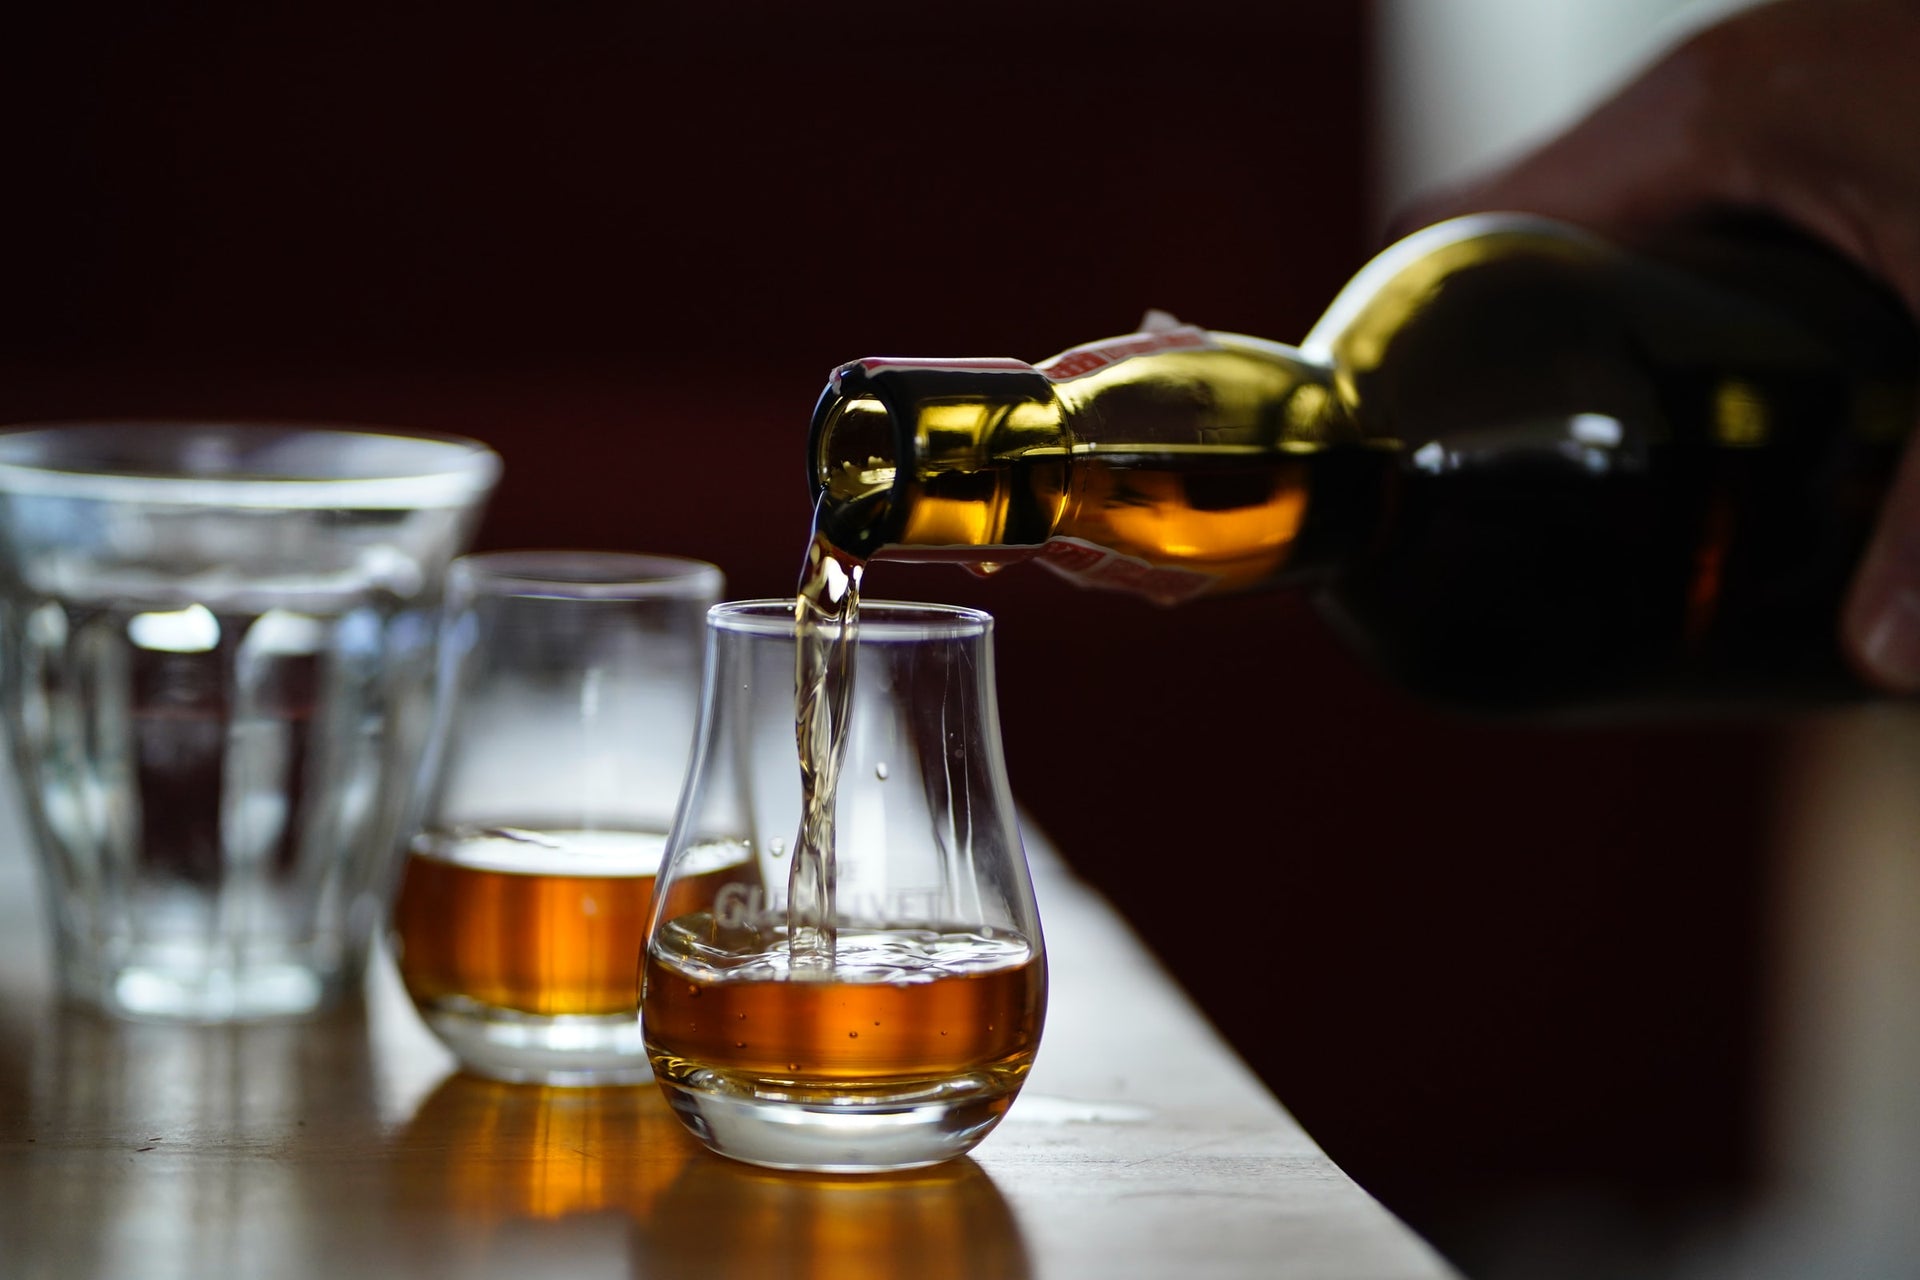 The best way to drink Irish Whisky